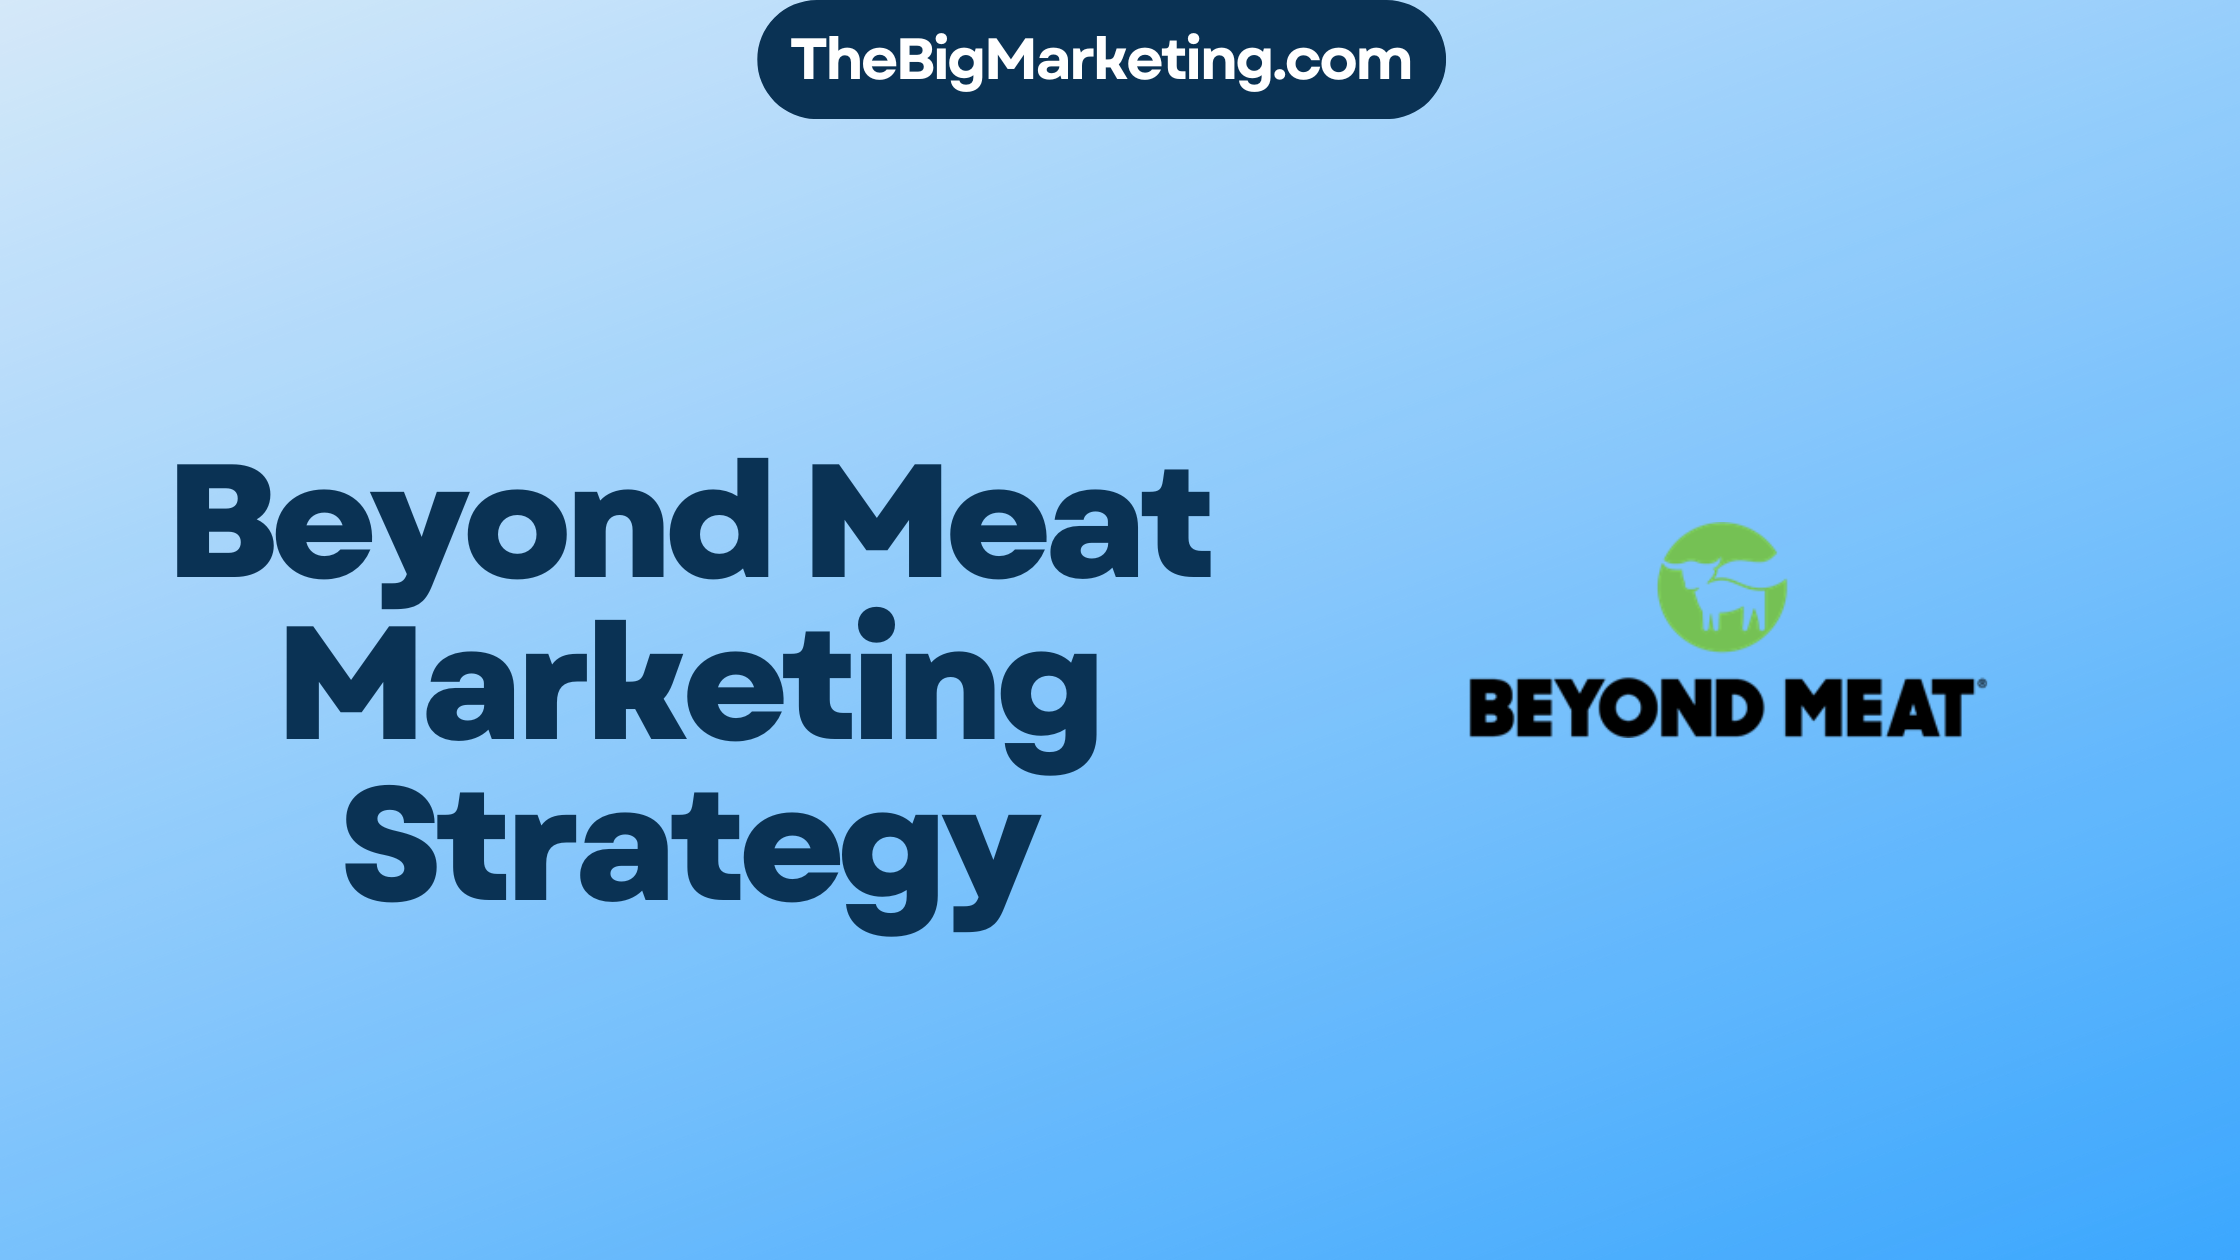 Beyond Meat Marketing Strategy